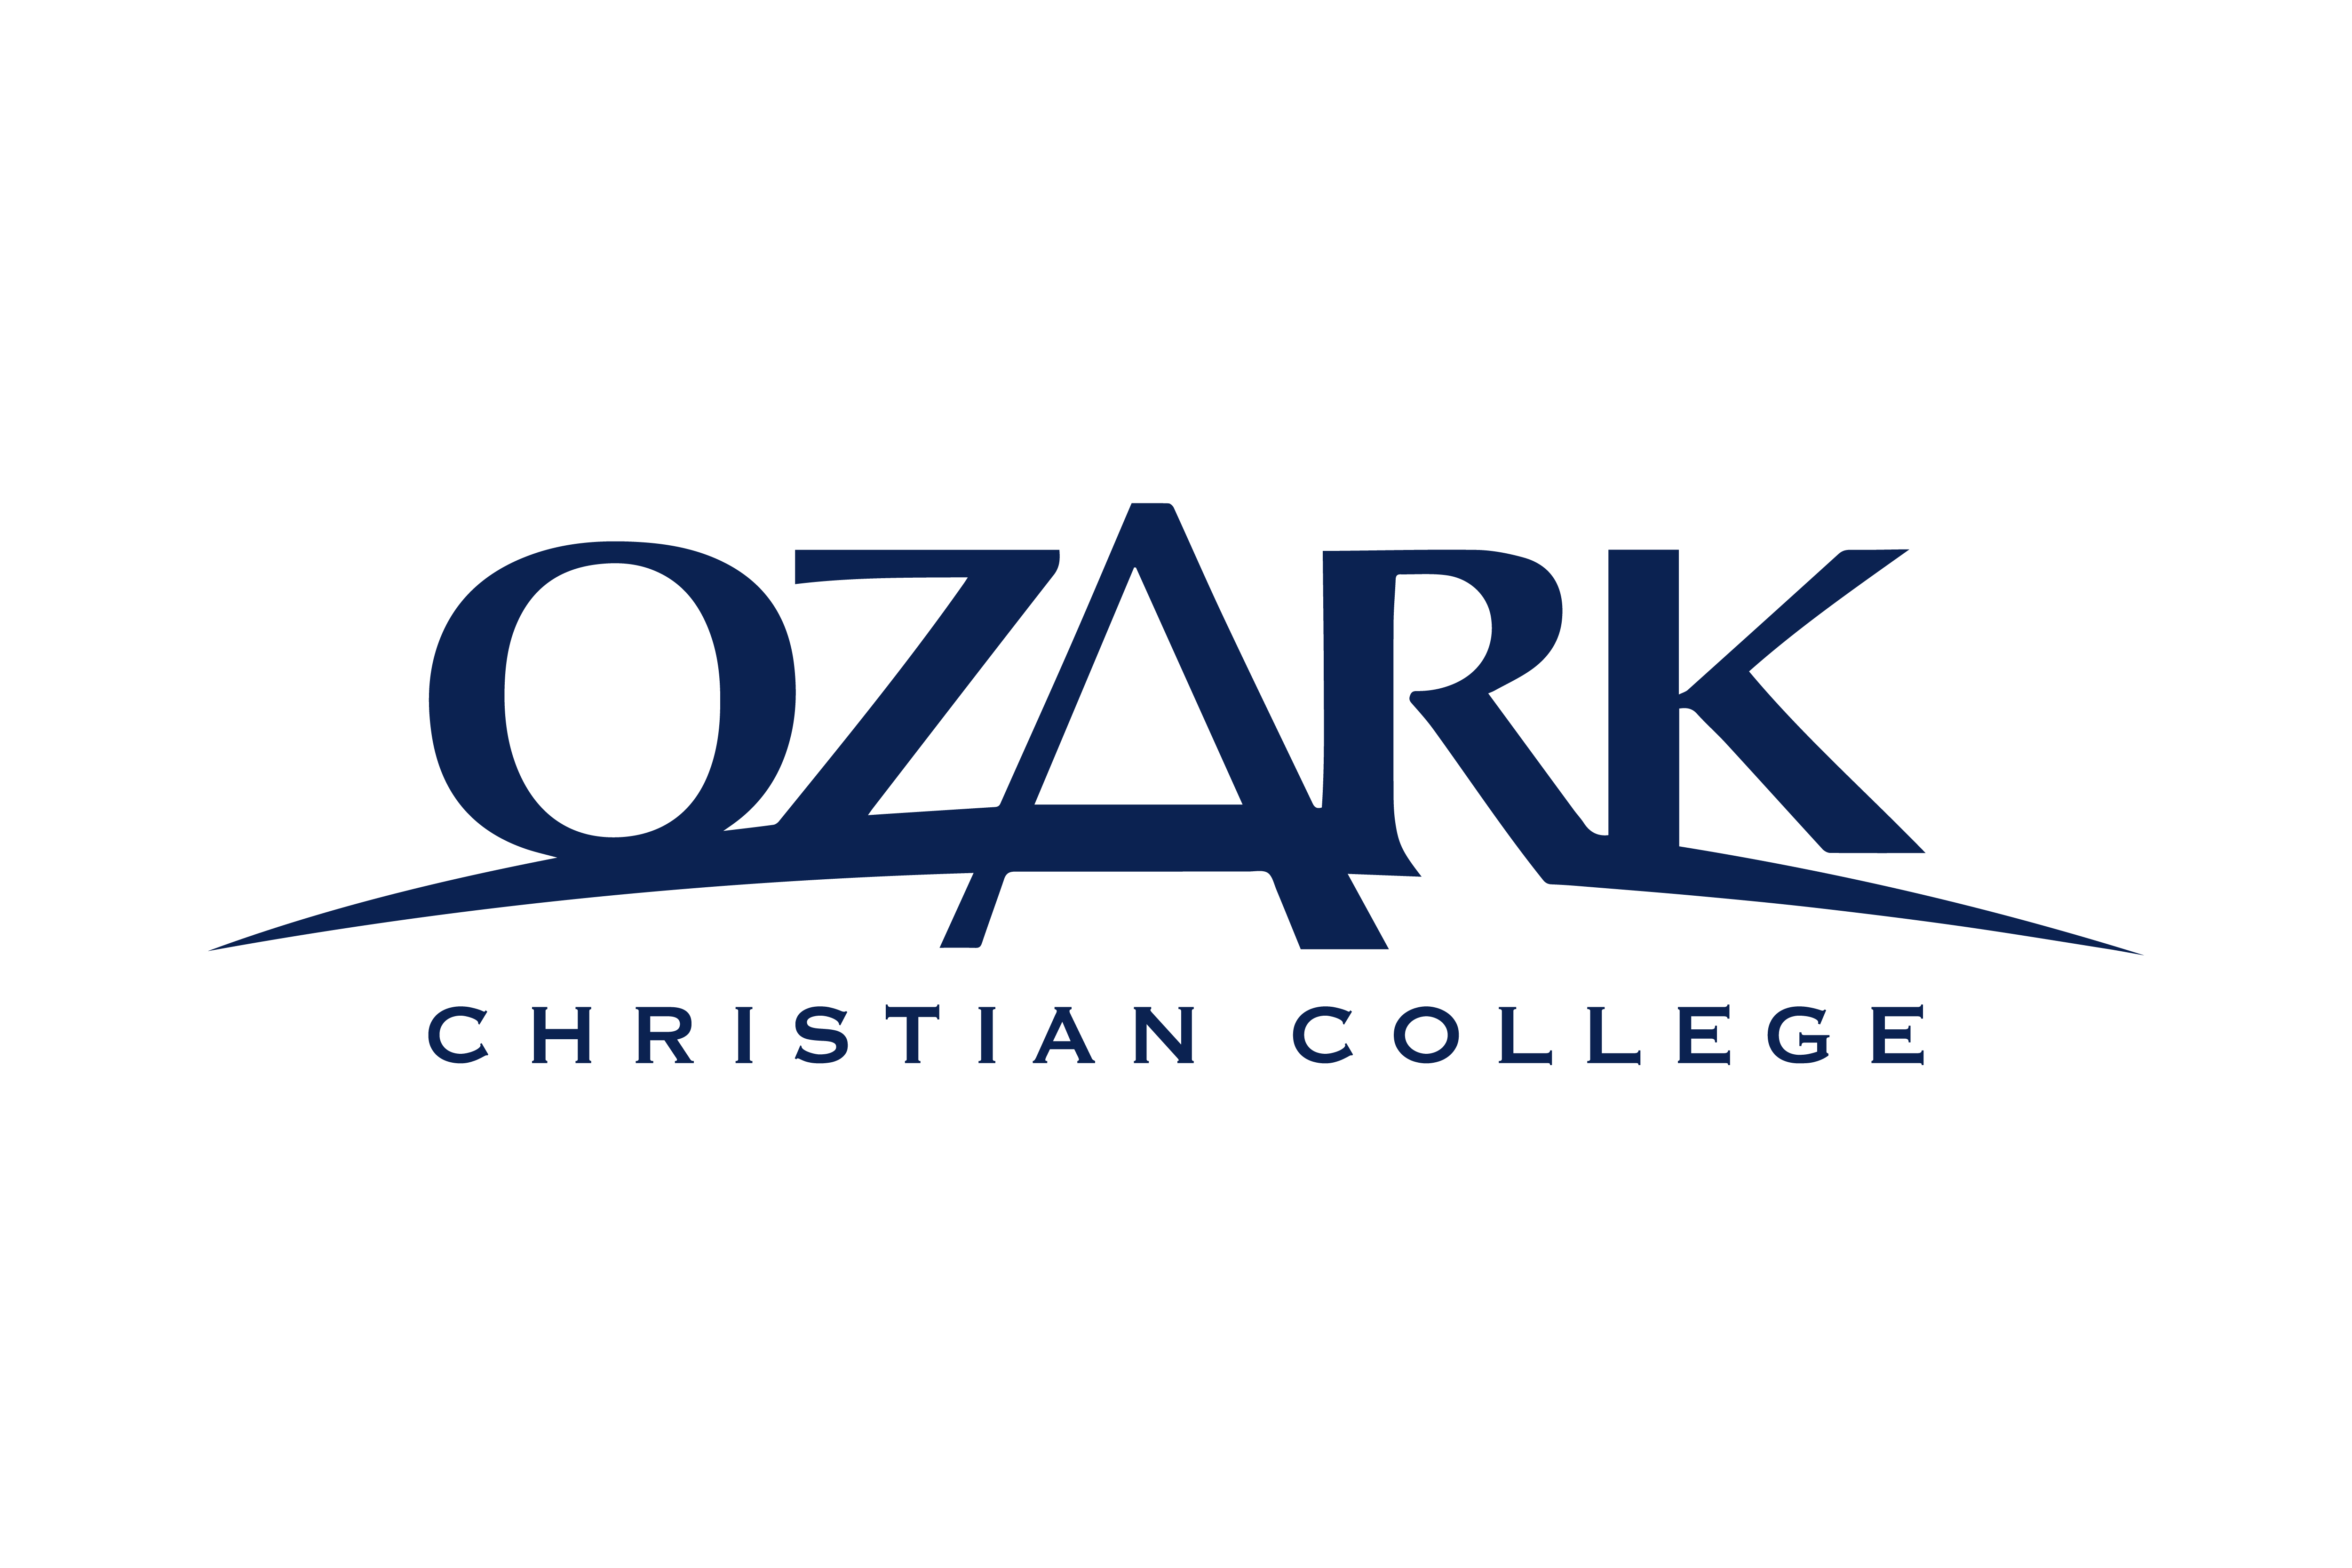 Ozark Christian College